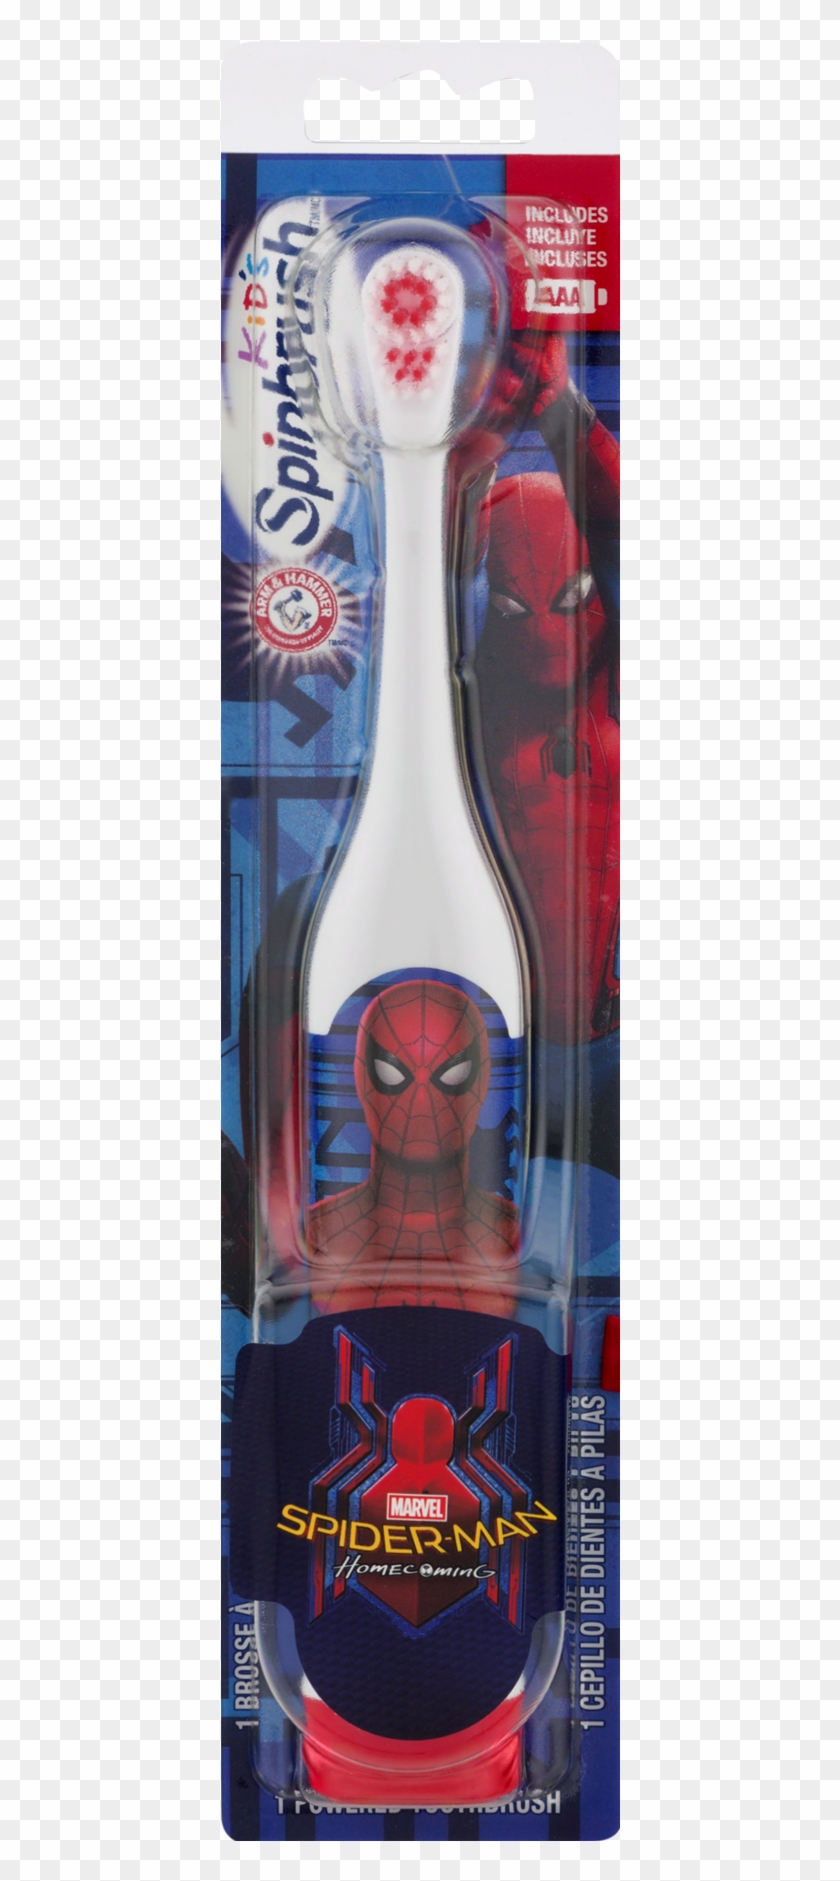 Arm & Hammer Kid's Spinbrush Marvel Spiderman Homecoming, - Arm & Hammer Clipart #923006